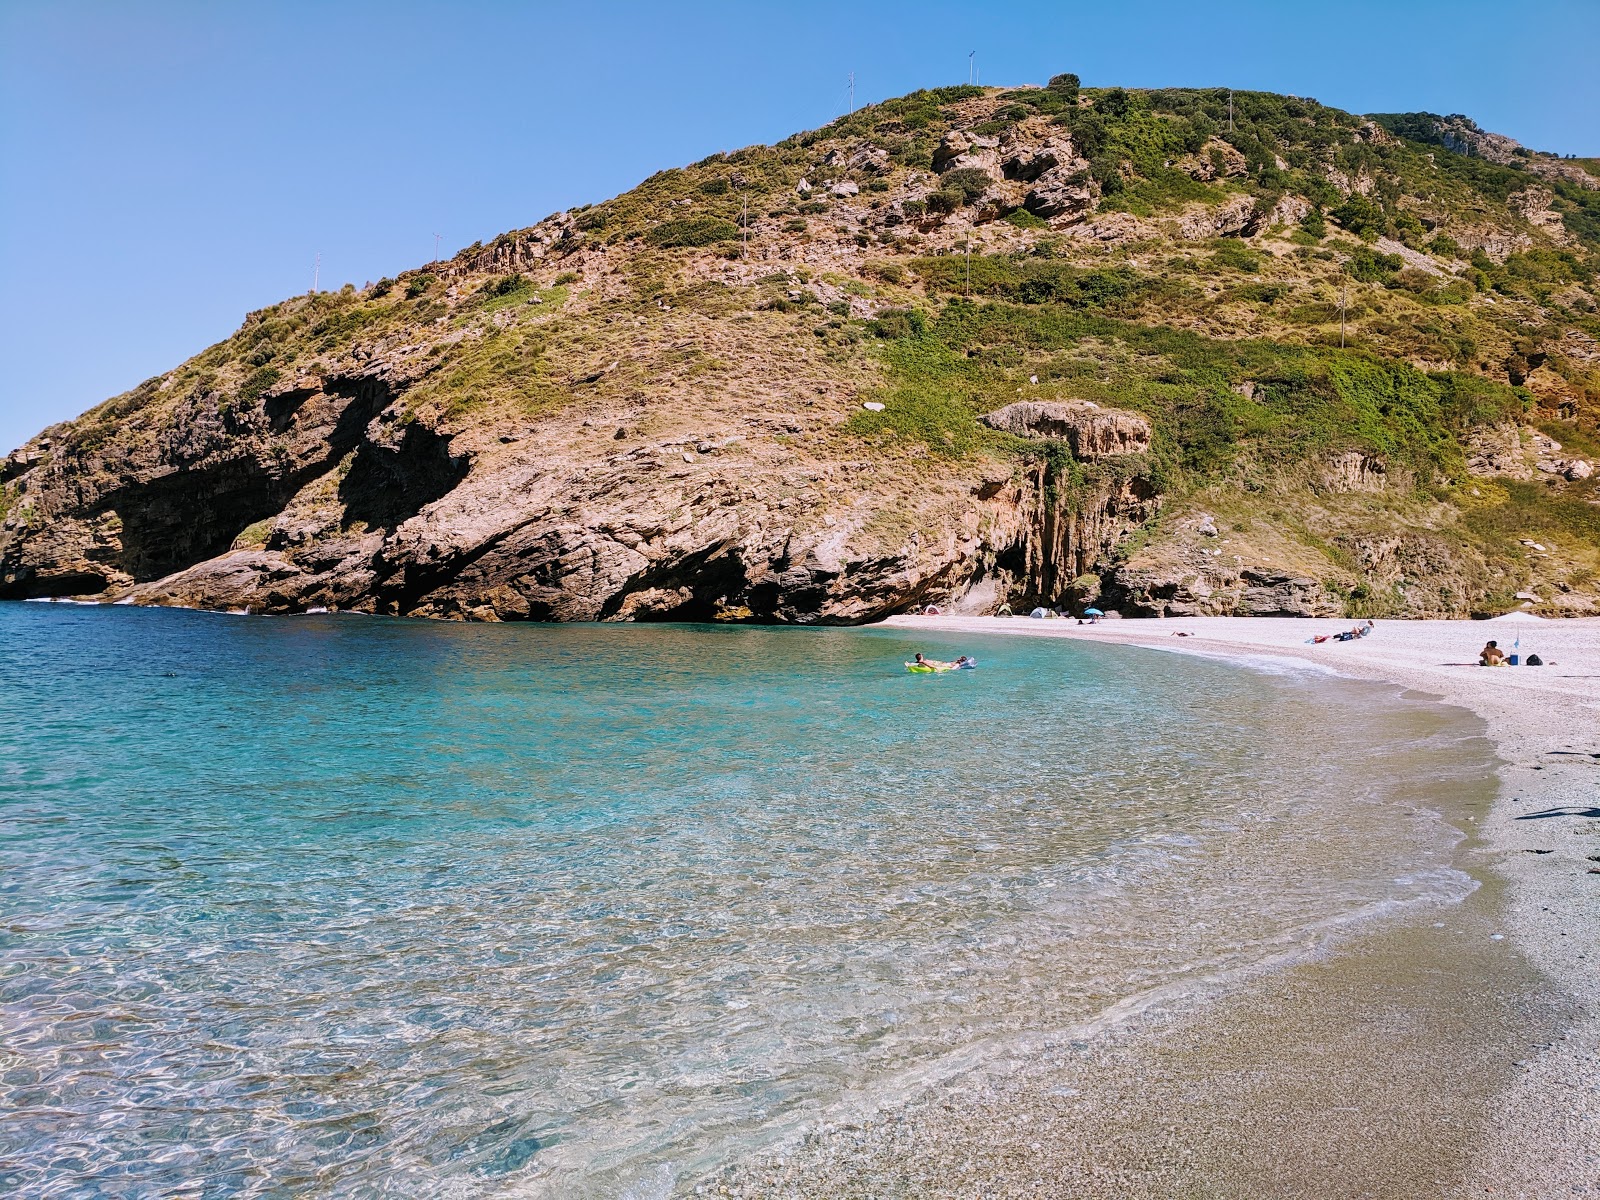 Valokuva Agios Dimitrios beachista. pinnalla kevyt hieno kivi:n kanssa